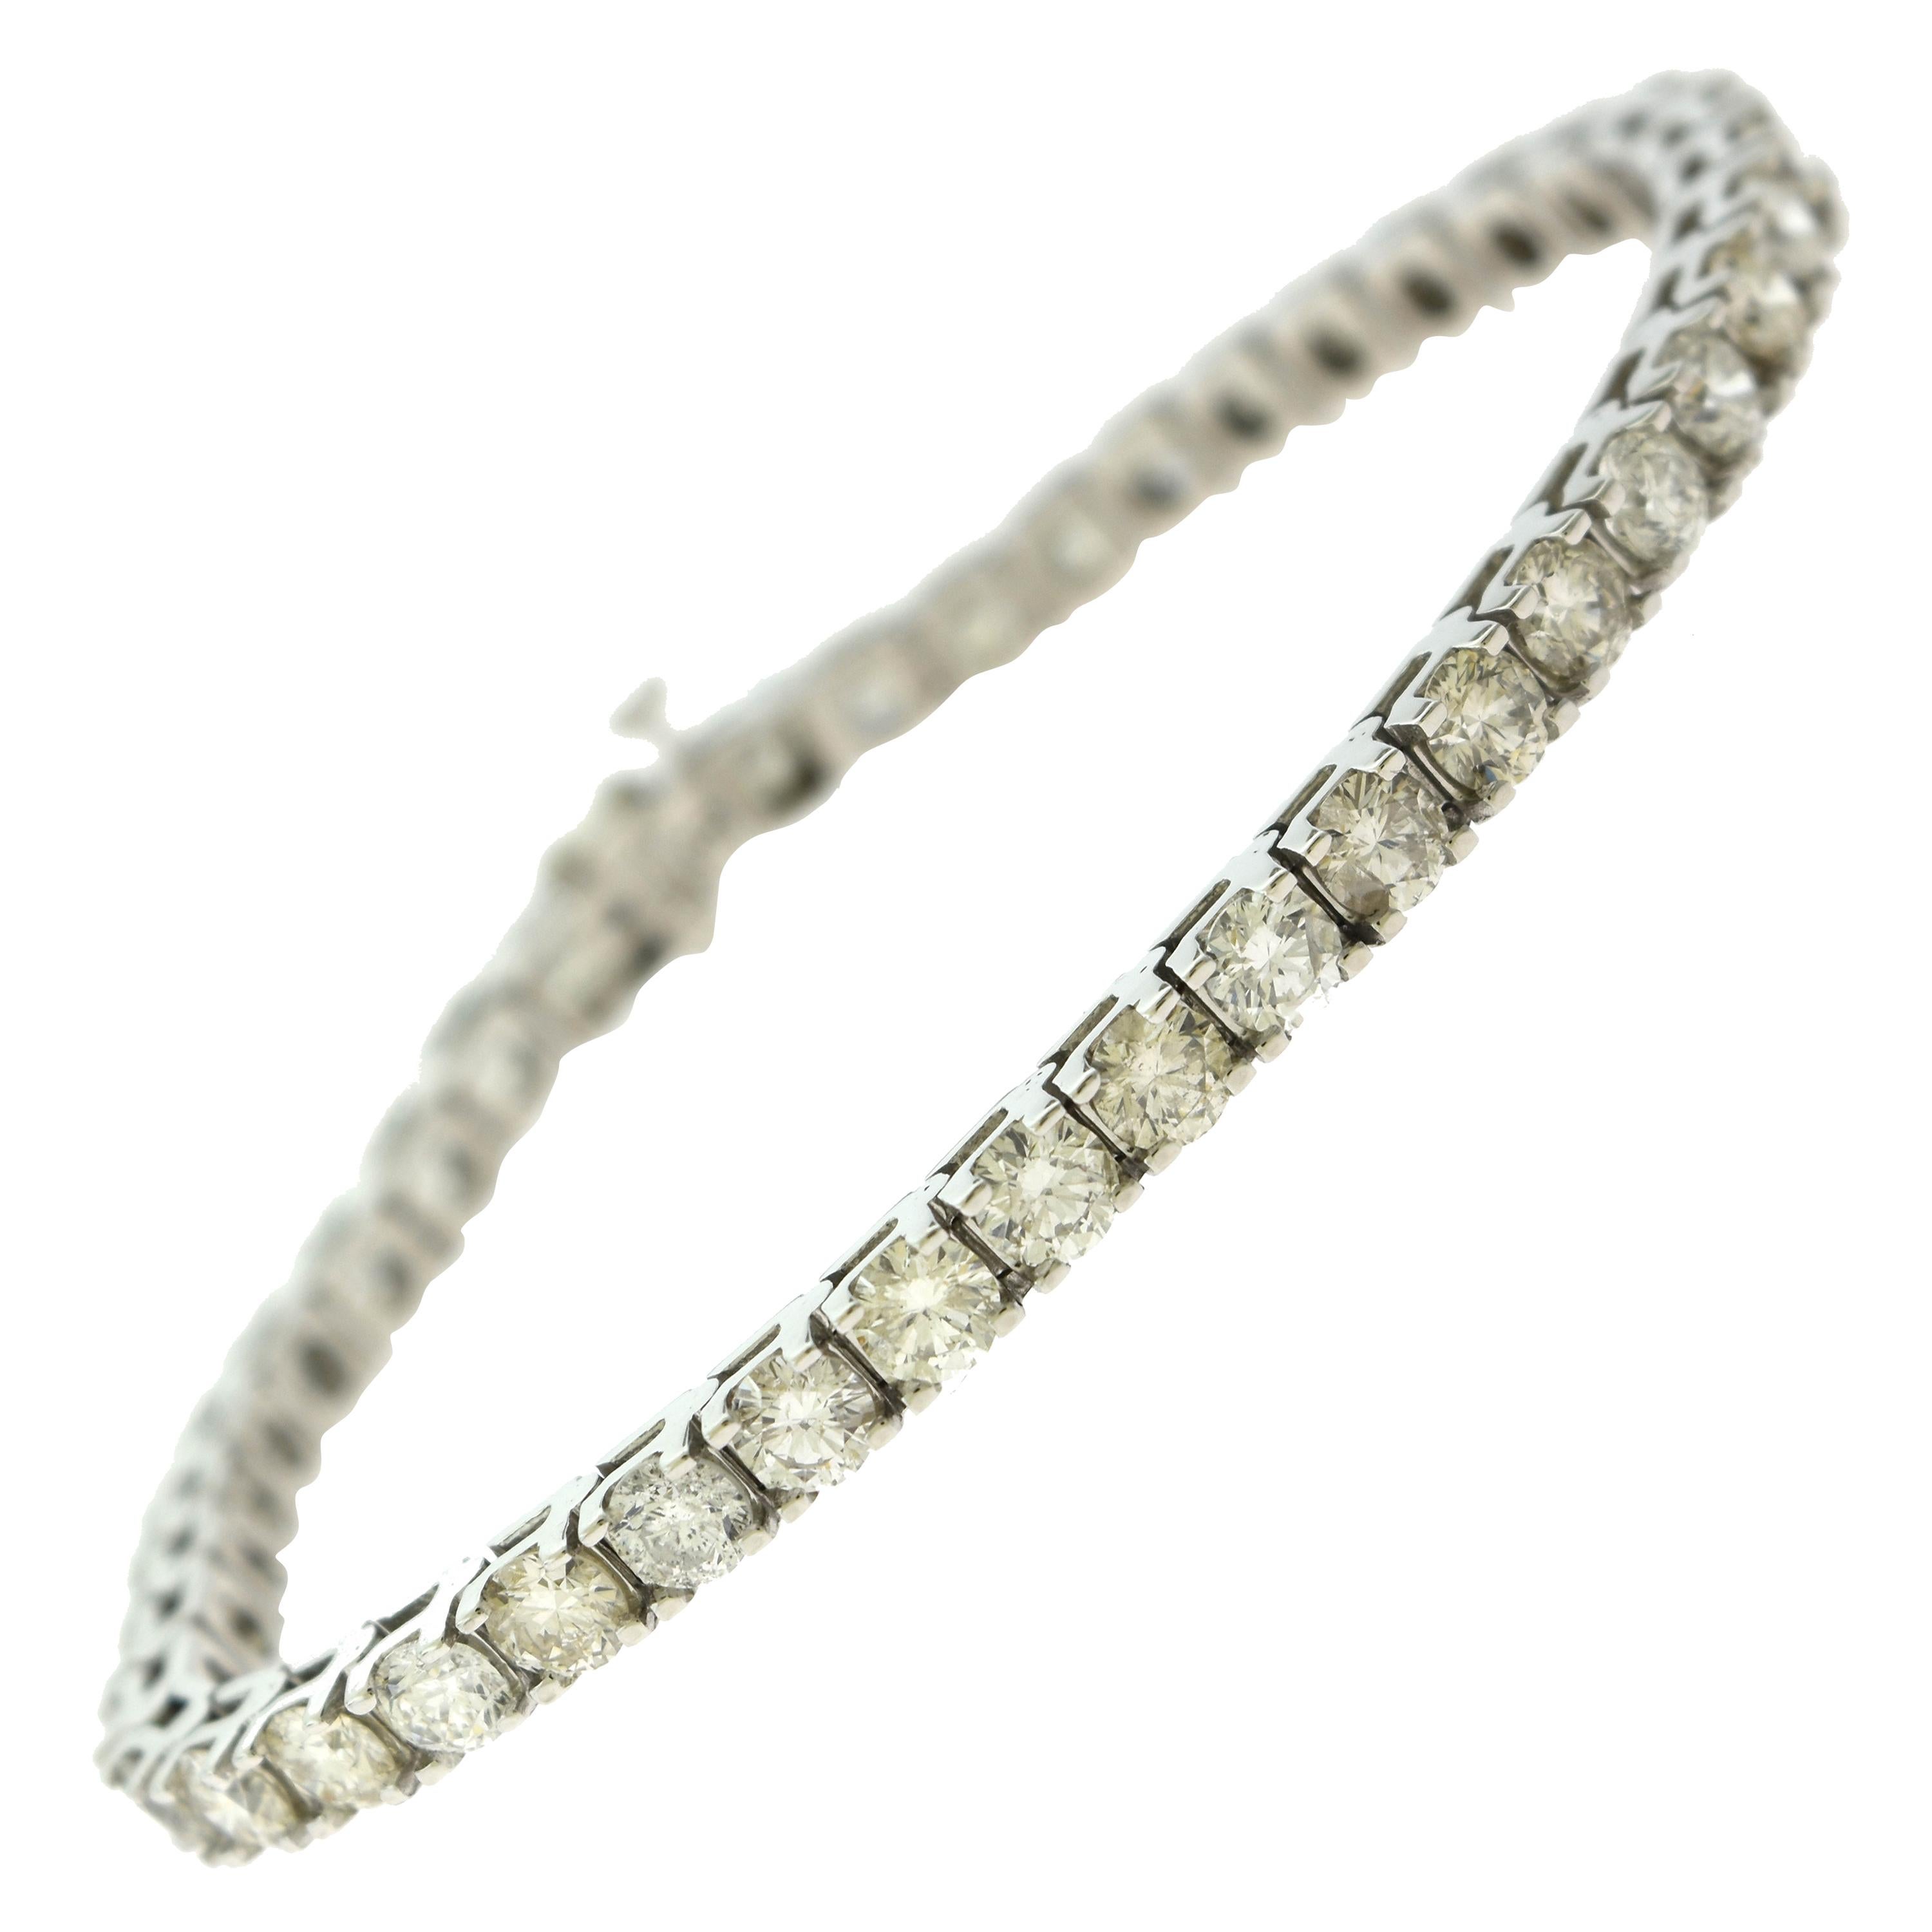 8 Total Carat Diamond Tennis Line Bracelet in White Gold